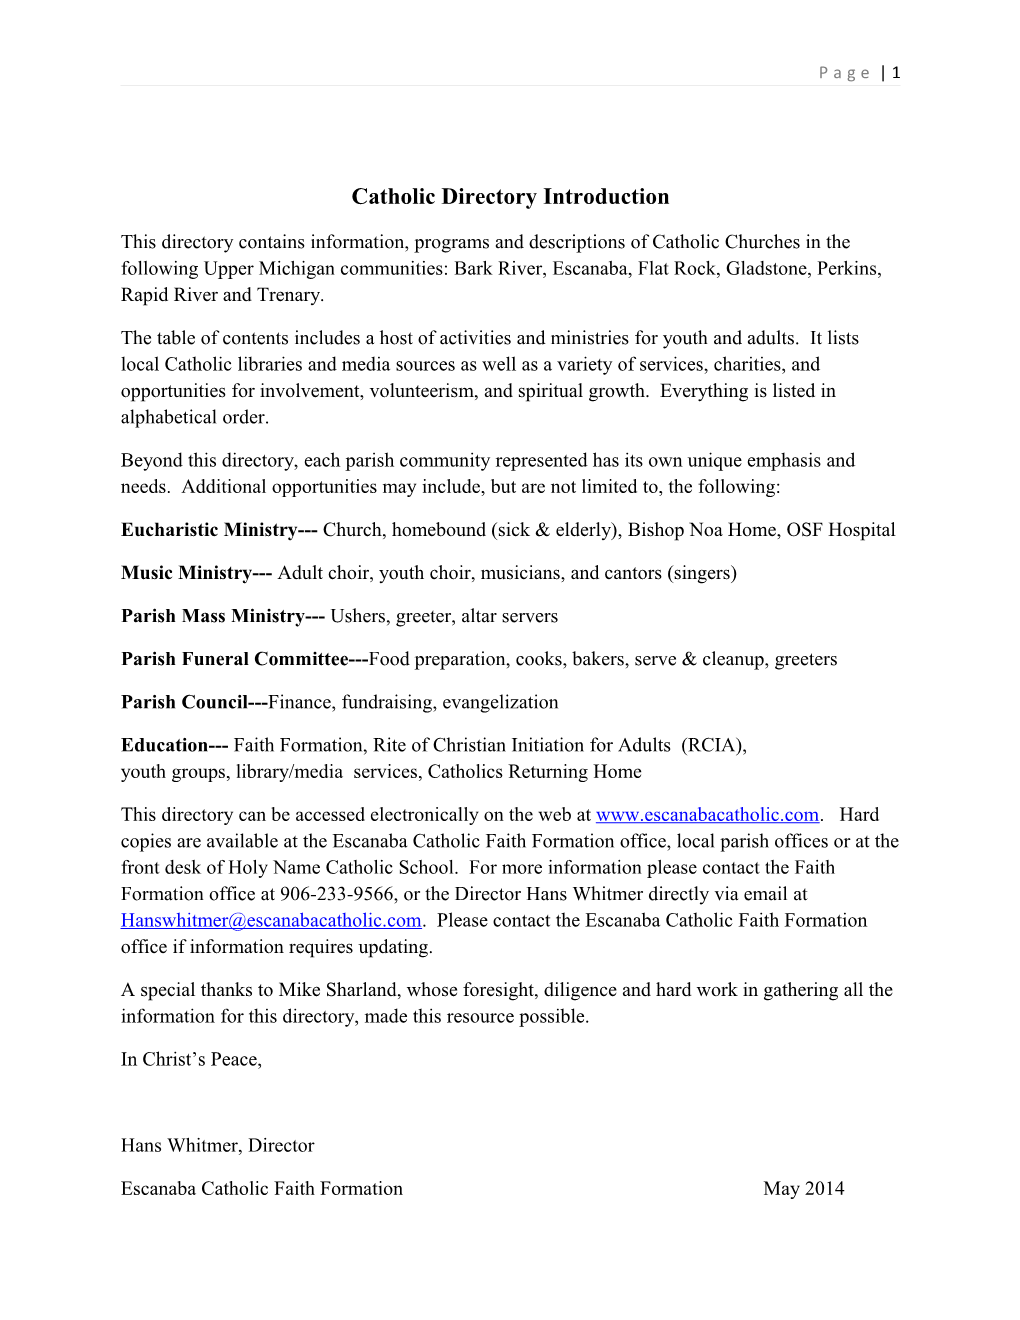 Catholic Directory Introduction